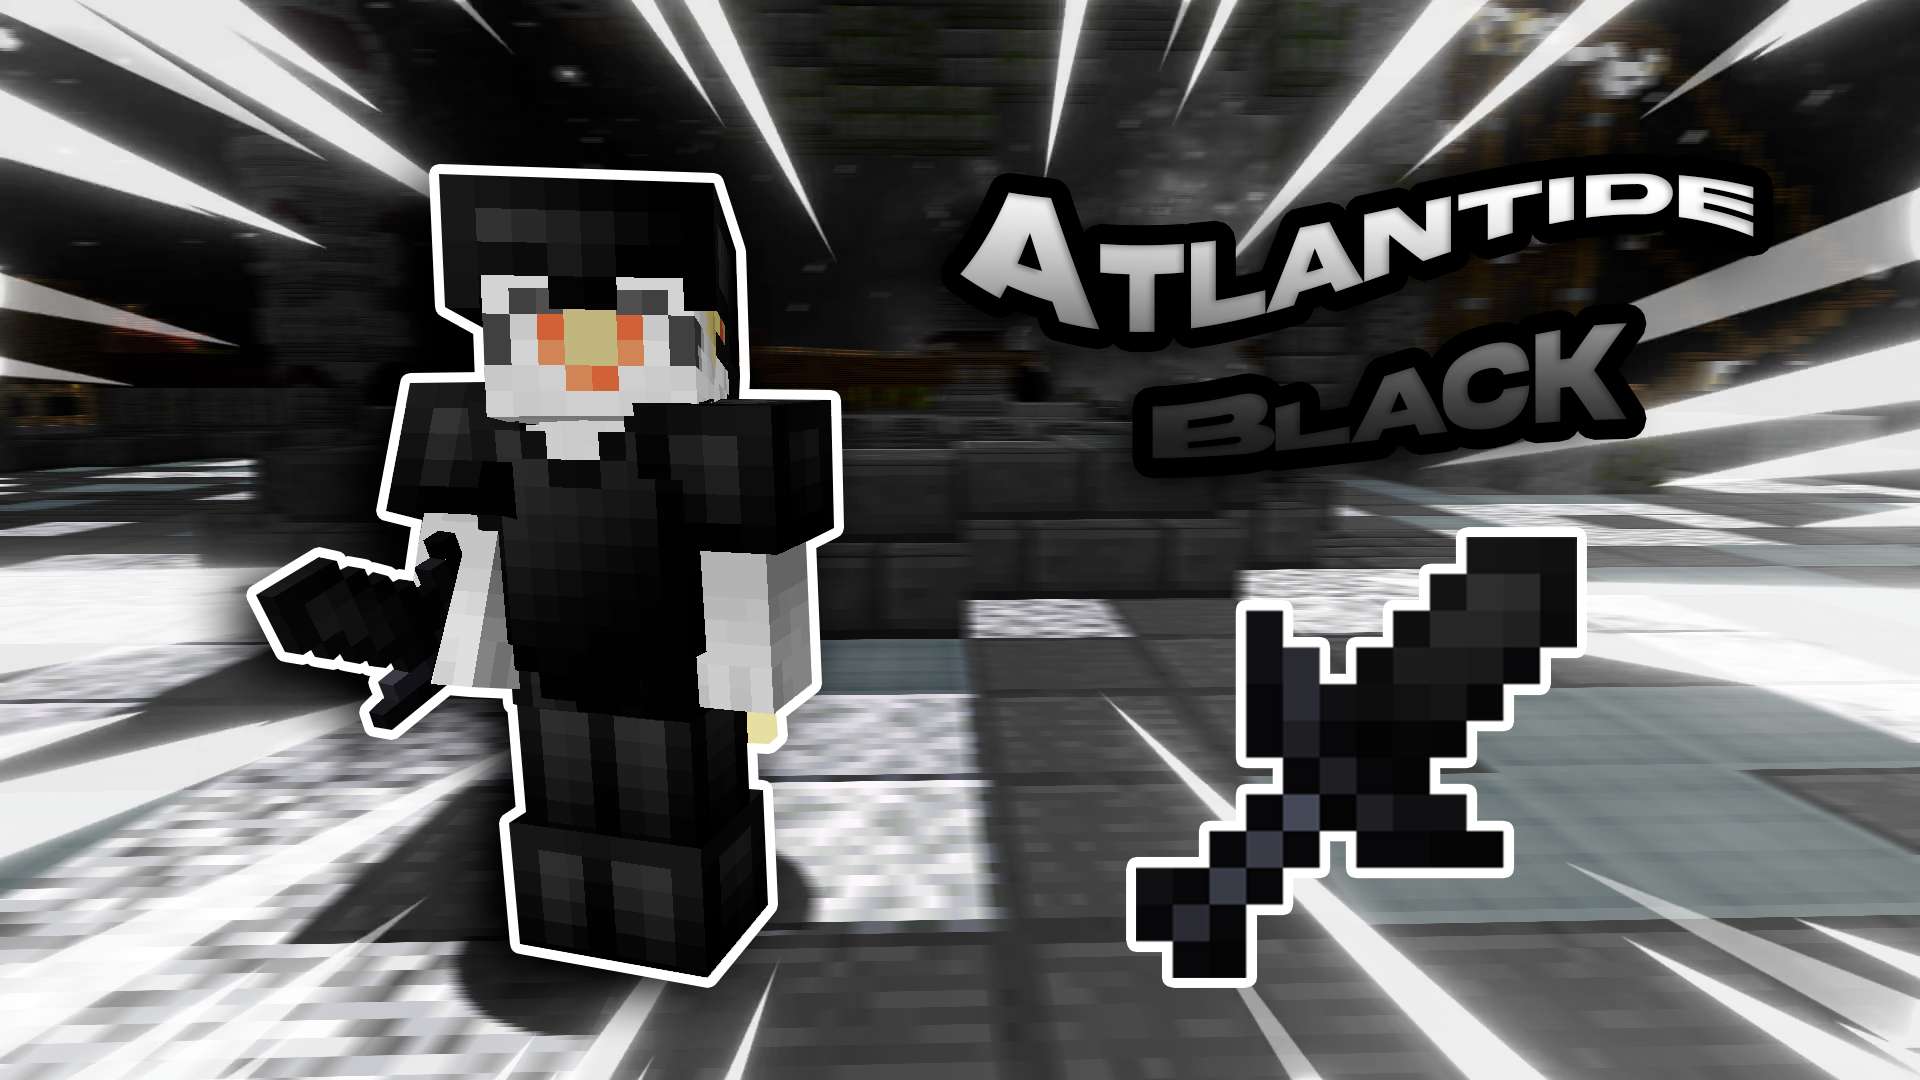 Atlantide (Black) 16 by Likorrne on PvPRP